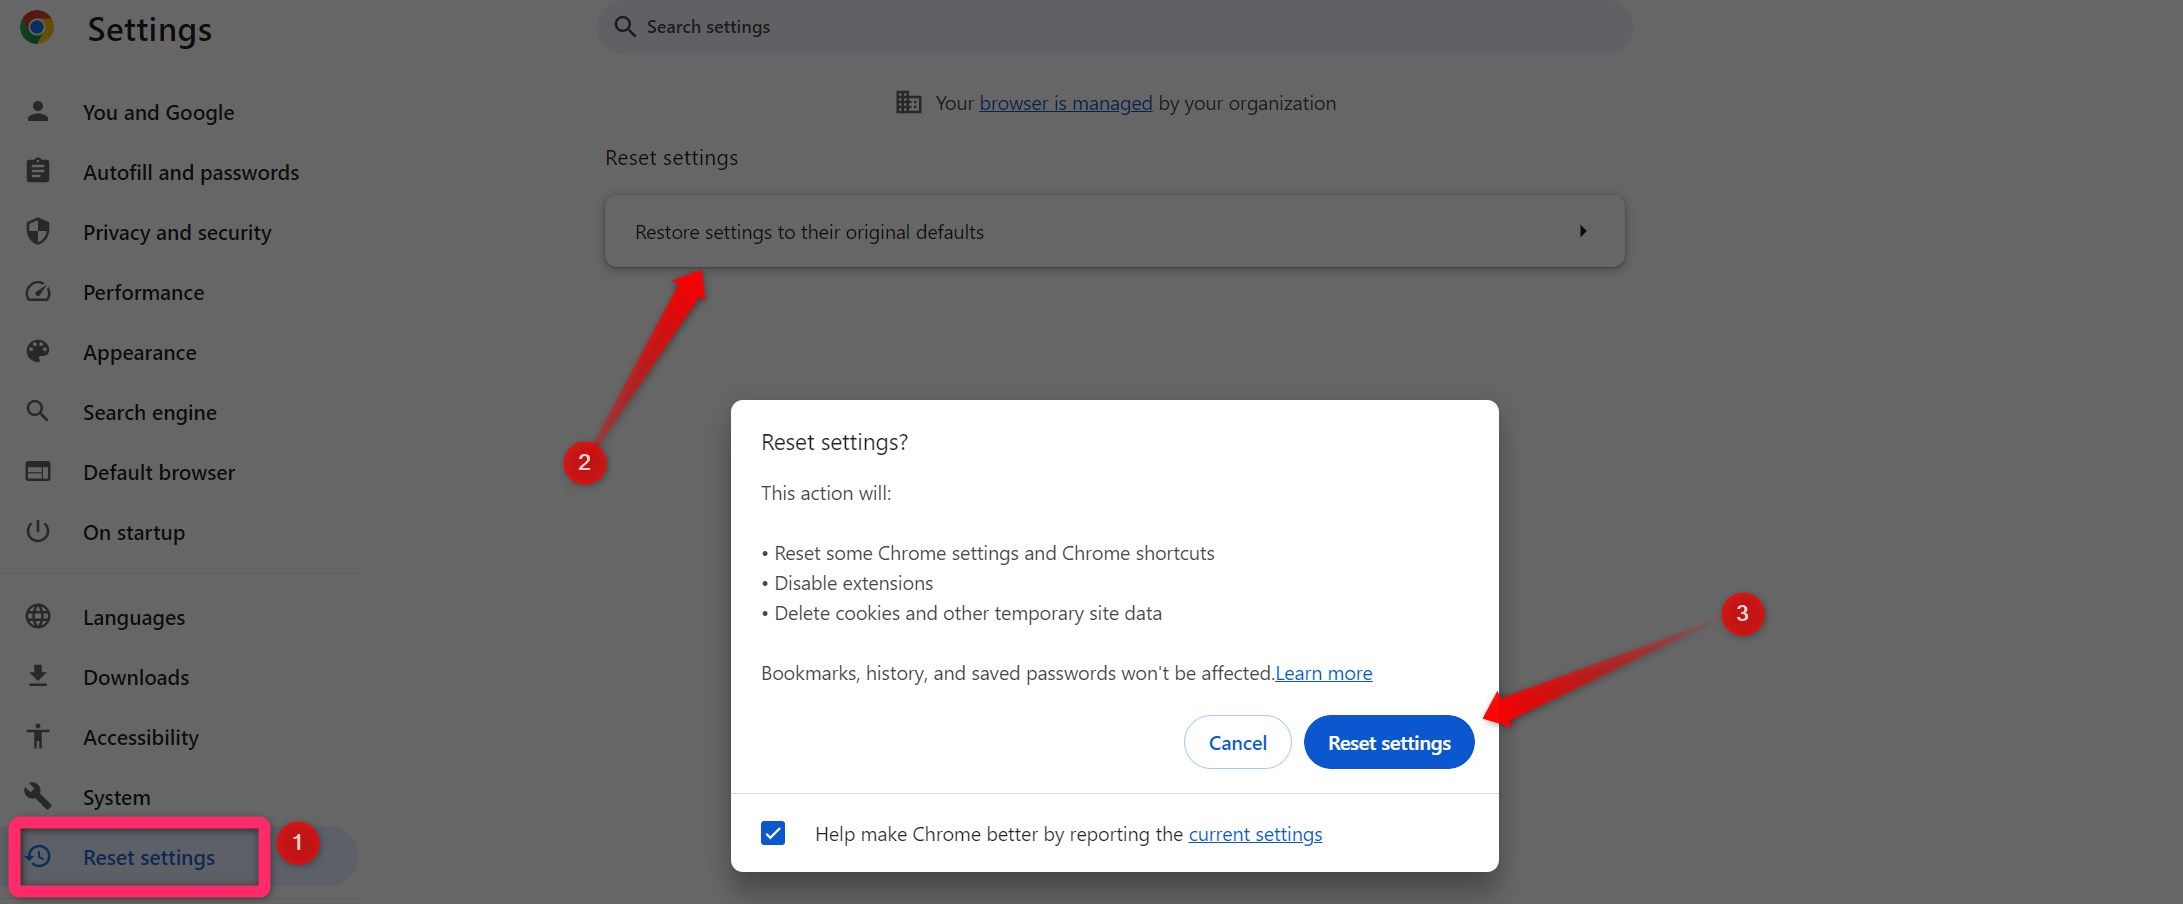 Resetting Chrome settings